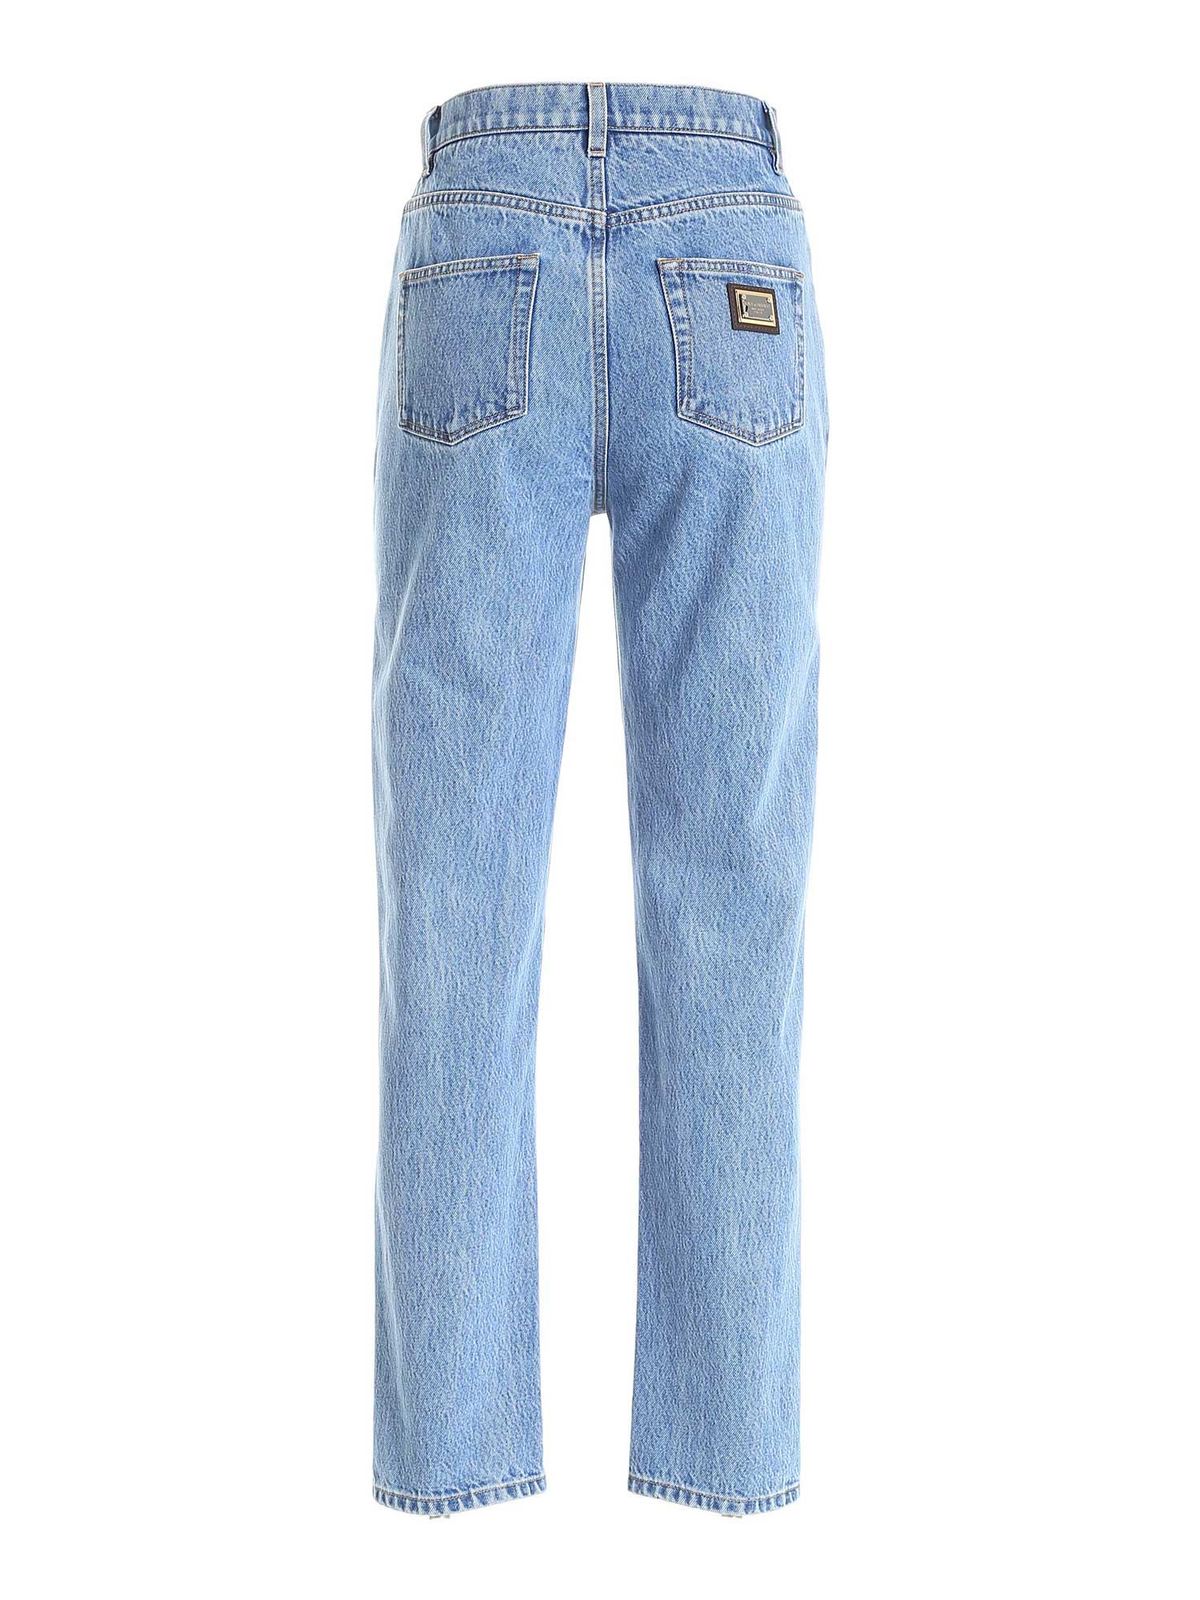 Straight leg jeans Dolce & Gabbana - Mom fit jeans in light blue -  FTBXDDG901US9001